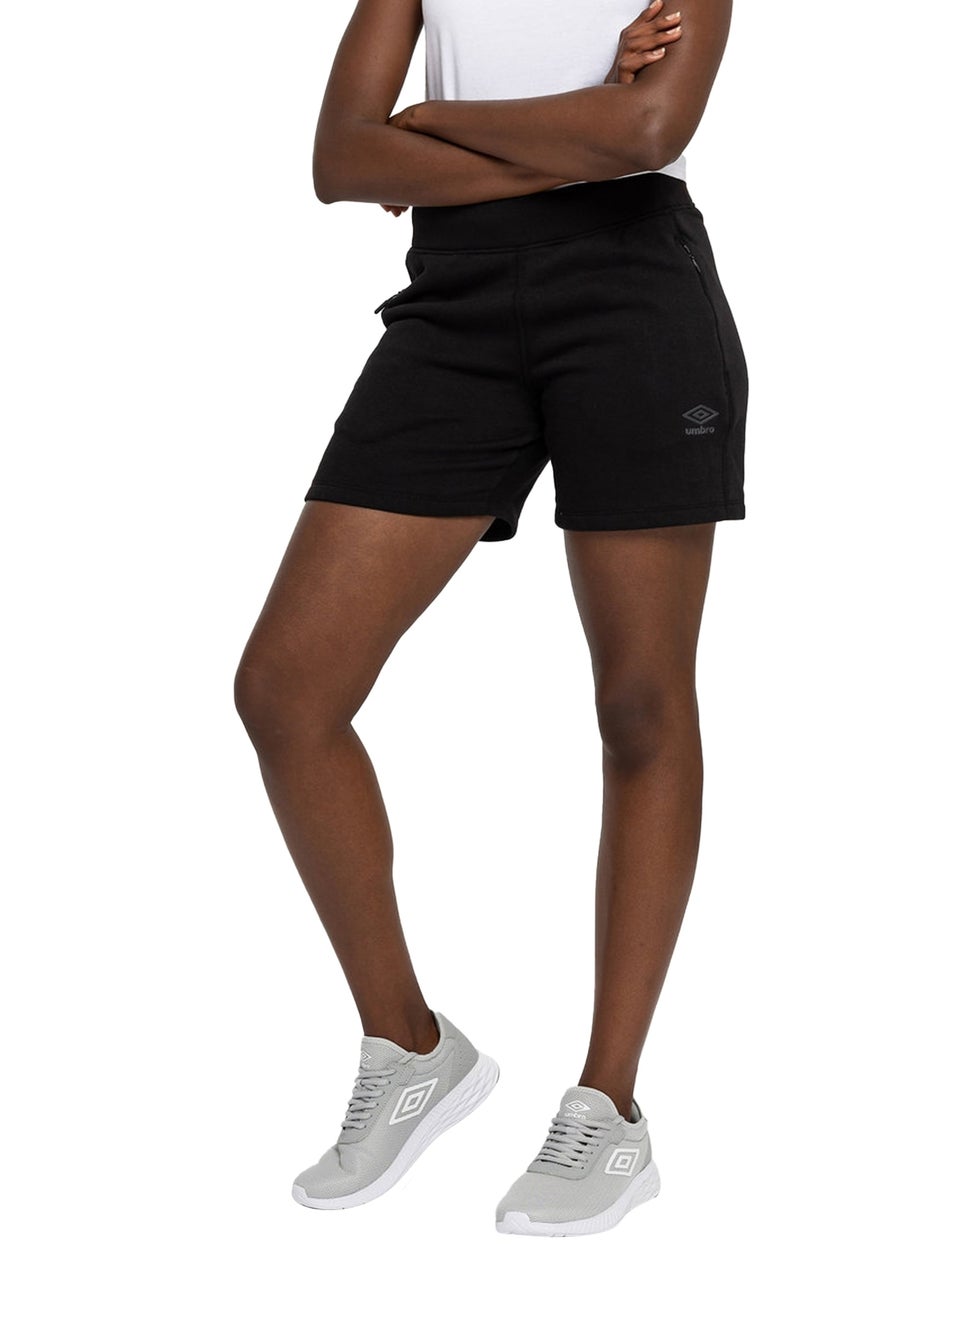 Umbro Black Pro Elite Fleece Shorts